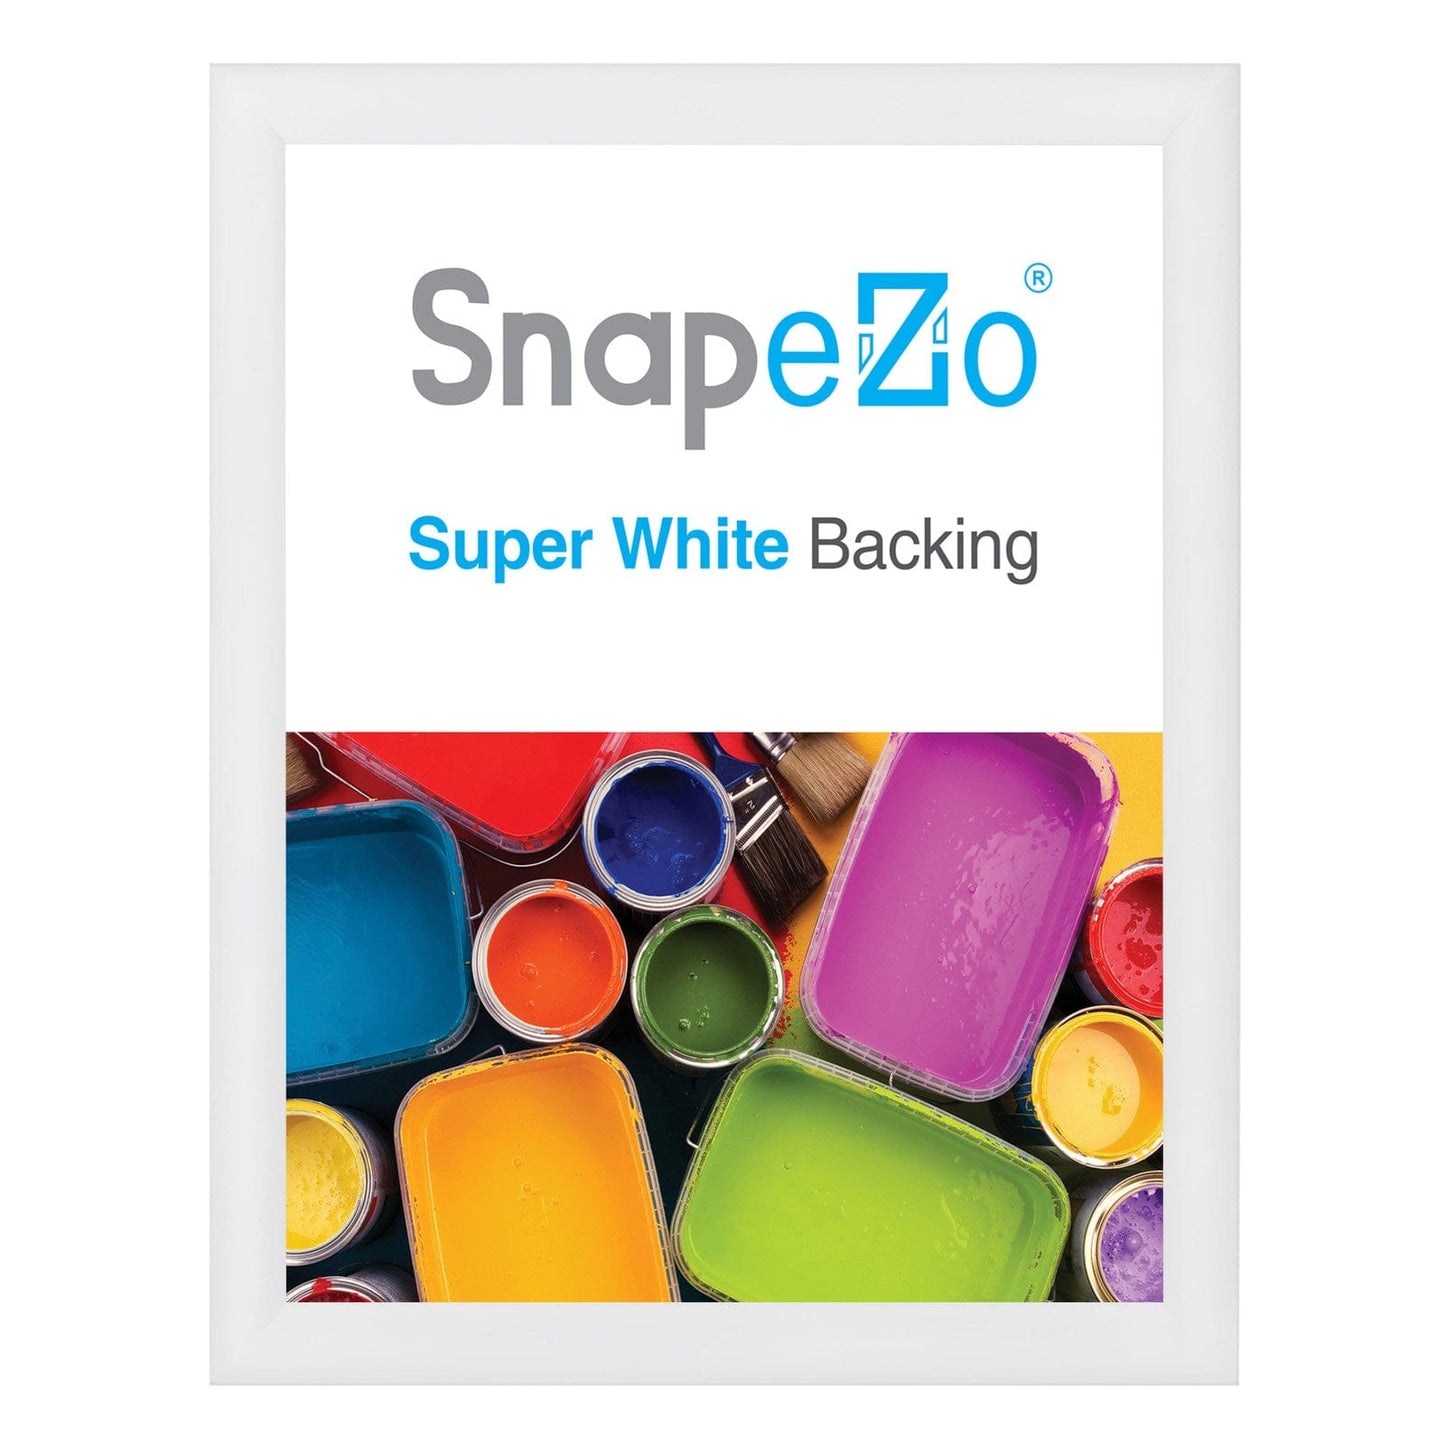 23x31 White SnapeZo® Snap Frame - 1.2" Profile - Snap Frames Direct